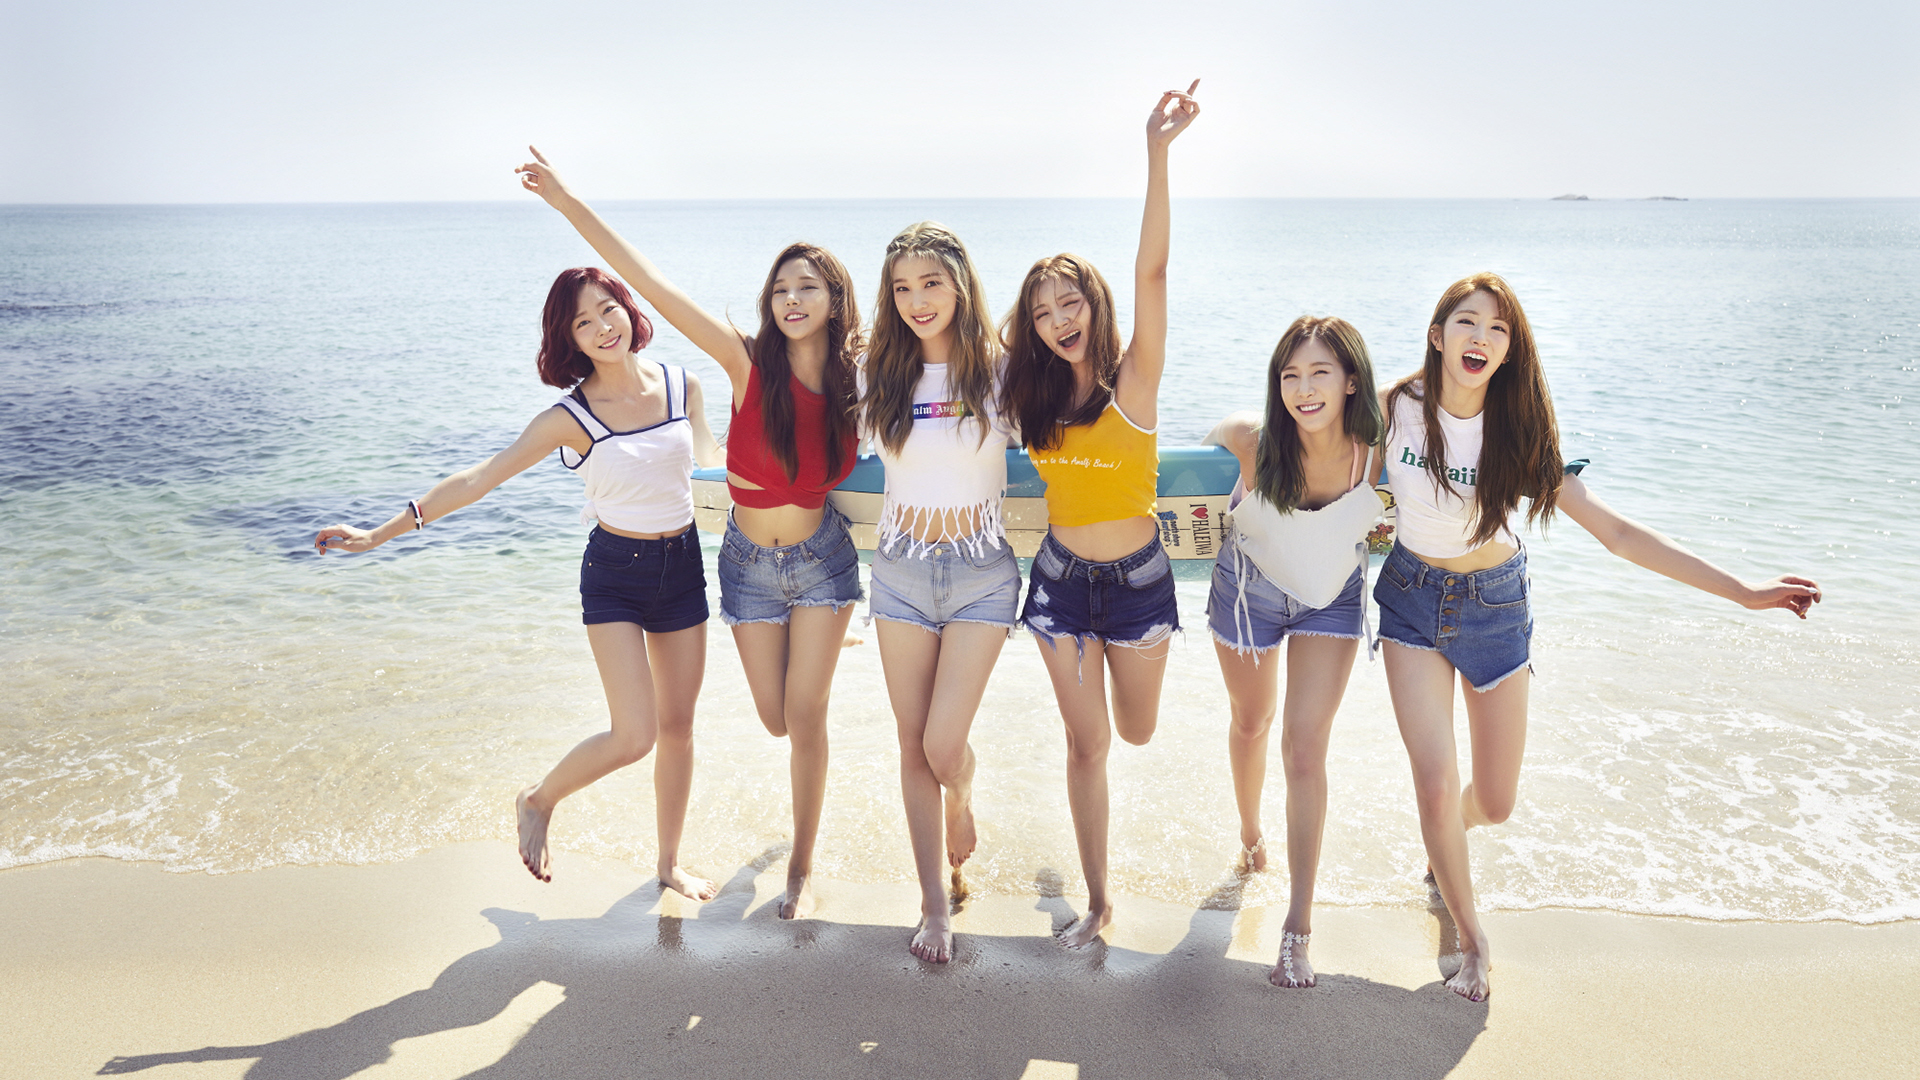 People 1920x1080 K-pop women group of women women outdoors beach arms up jean shorts Asian social gathering